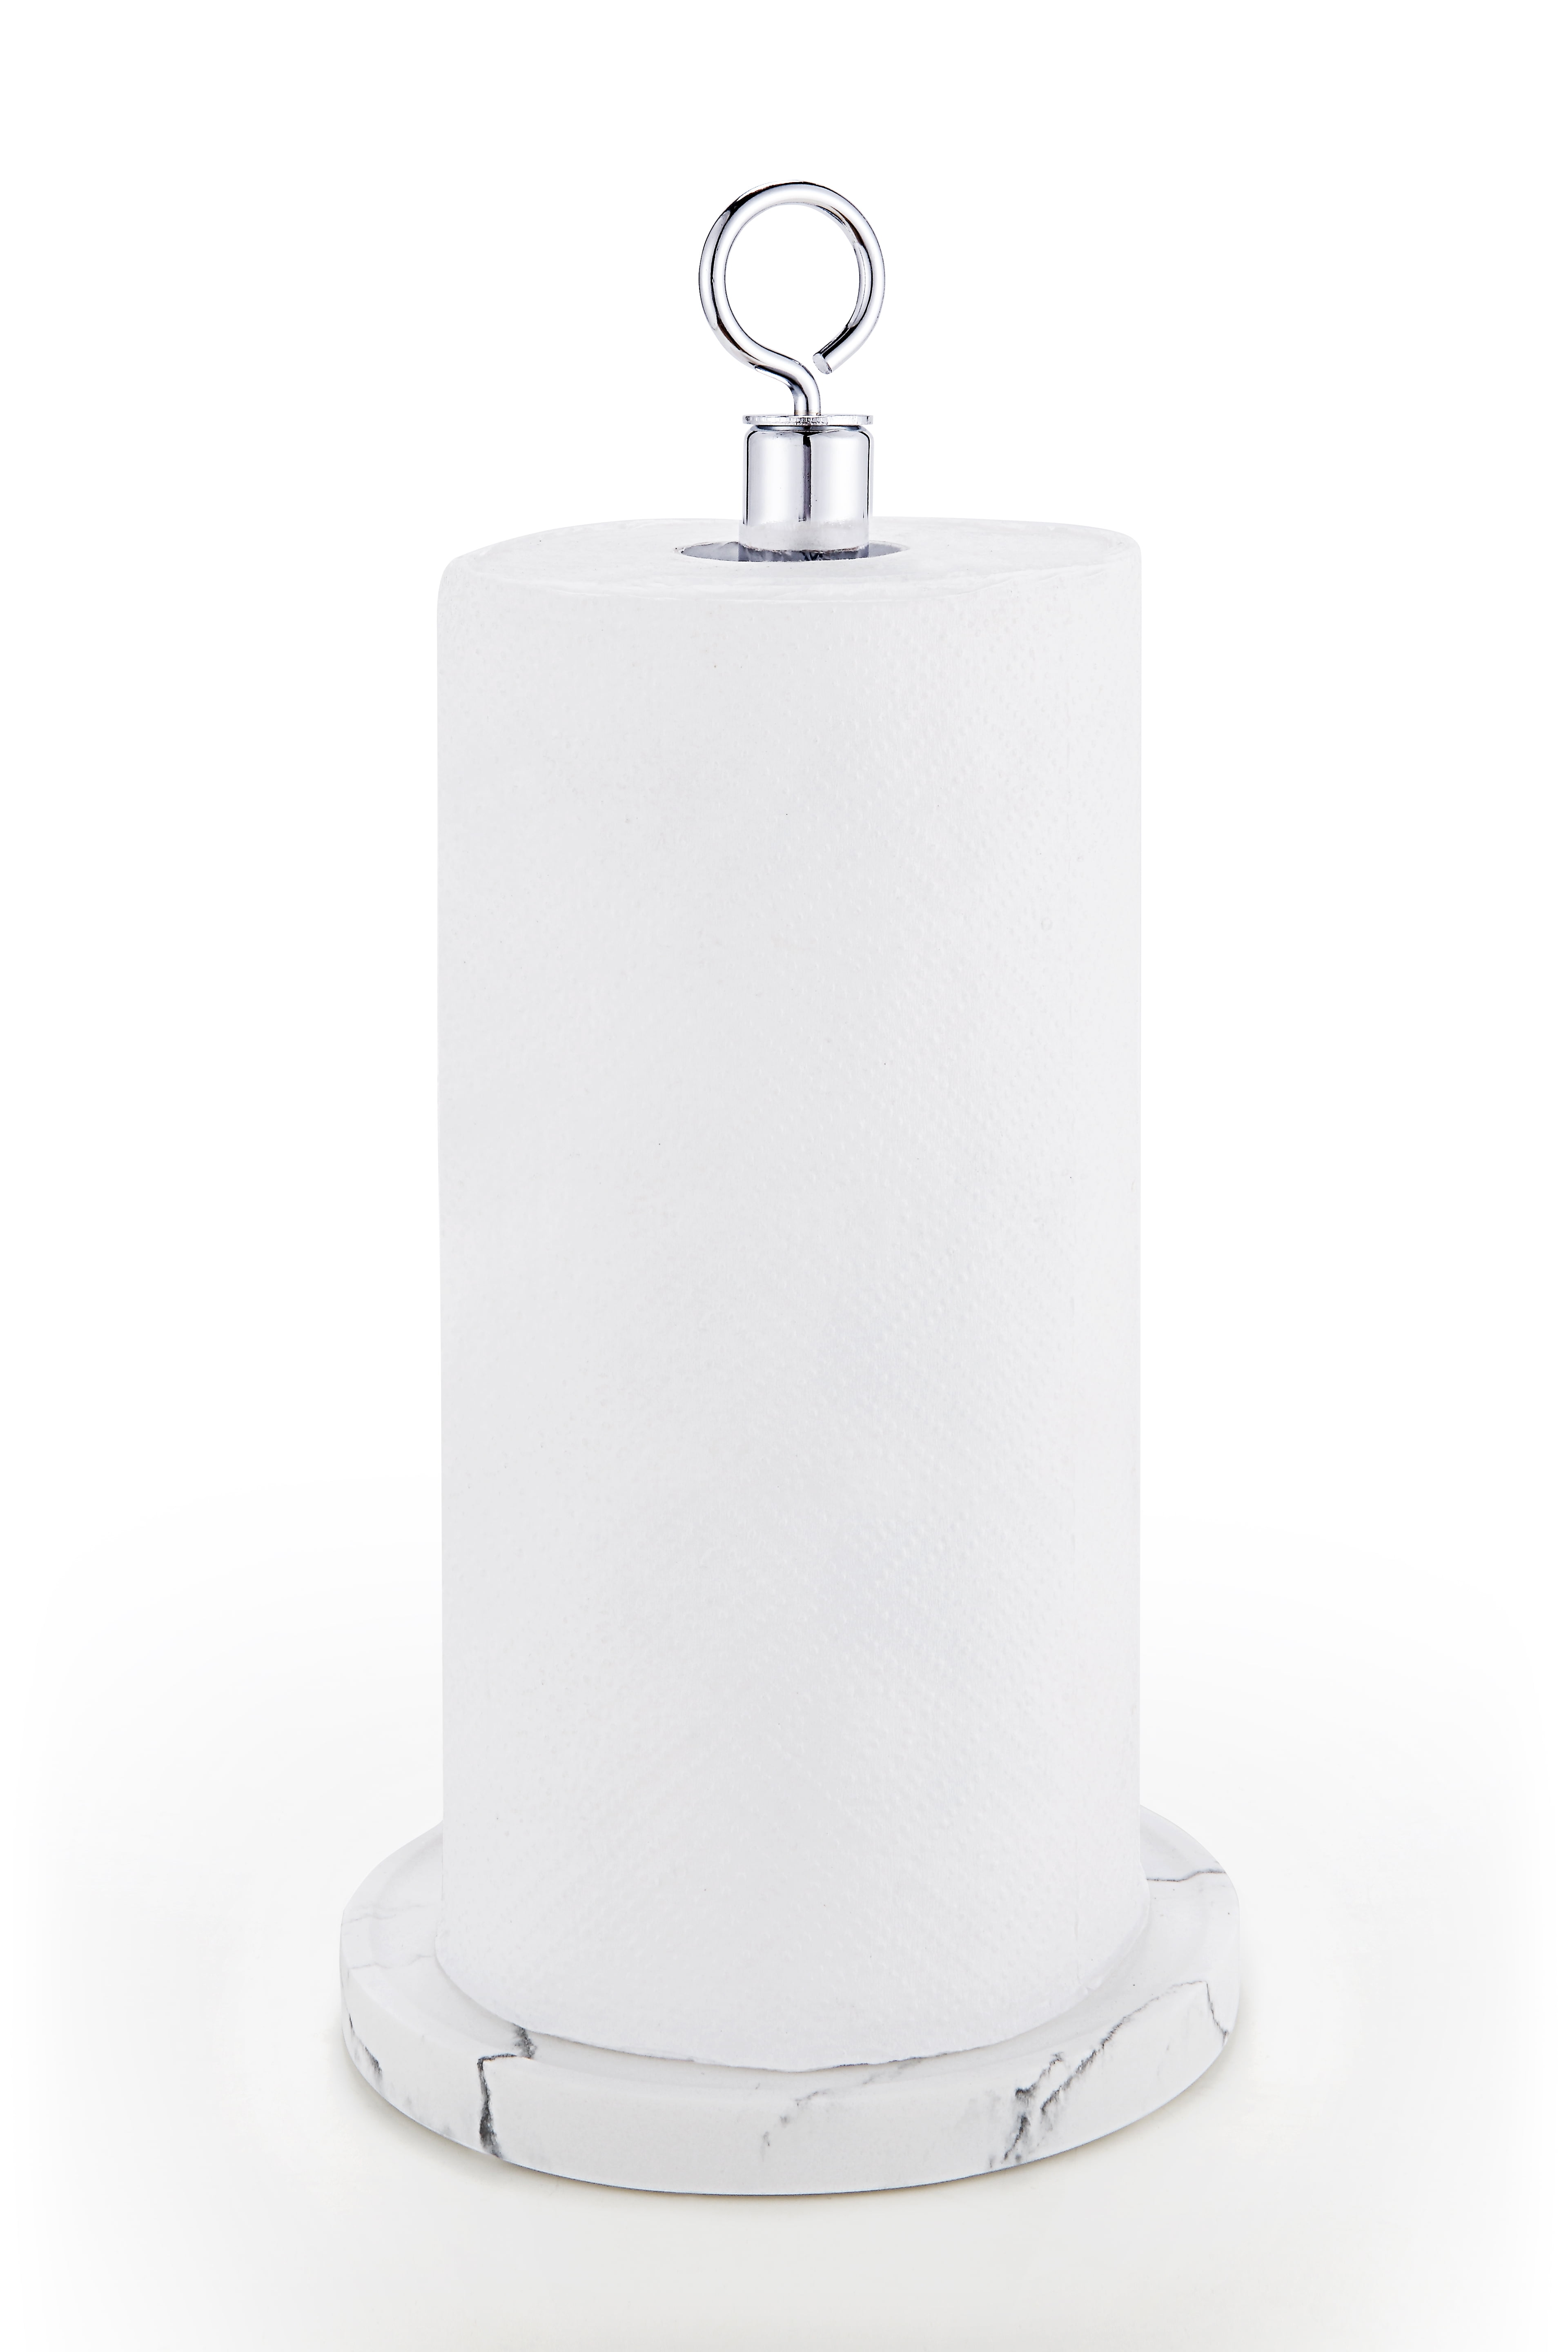 CTA Digital SM-PTH Paper Towel Holder with Gooseneck Stand